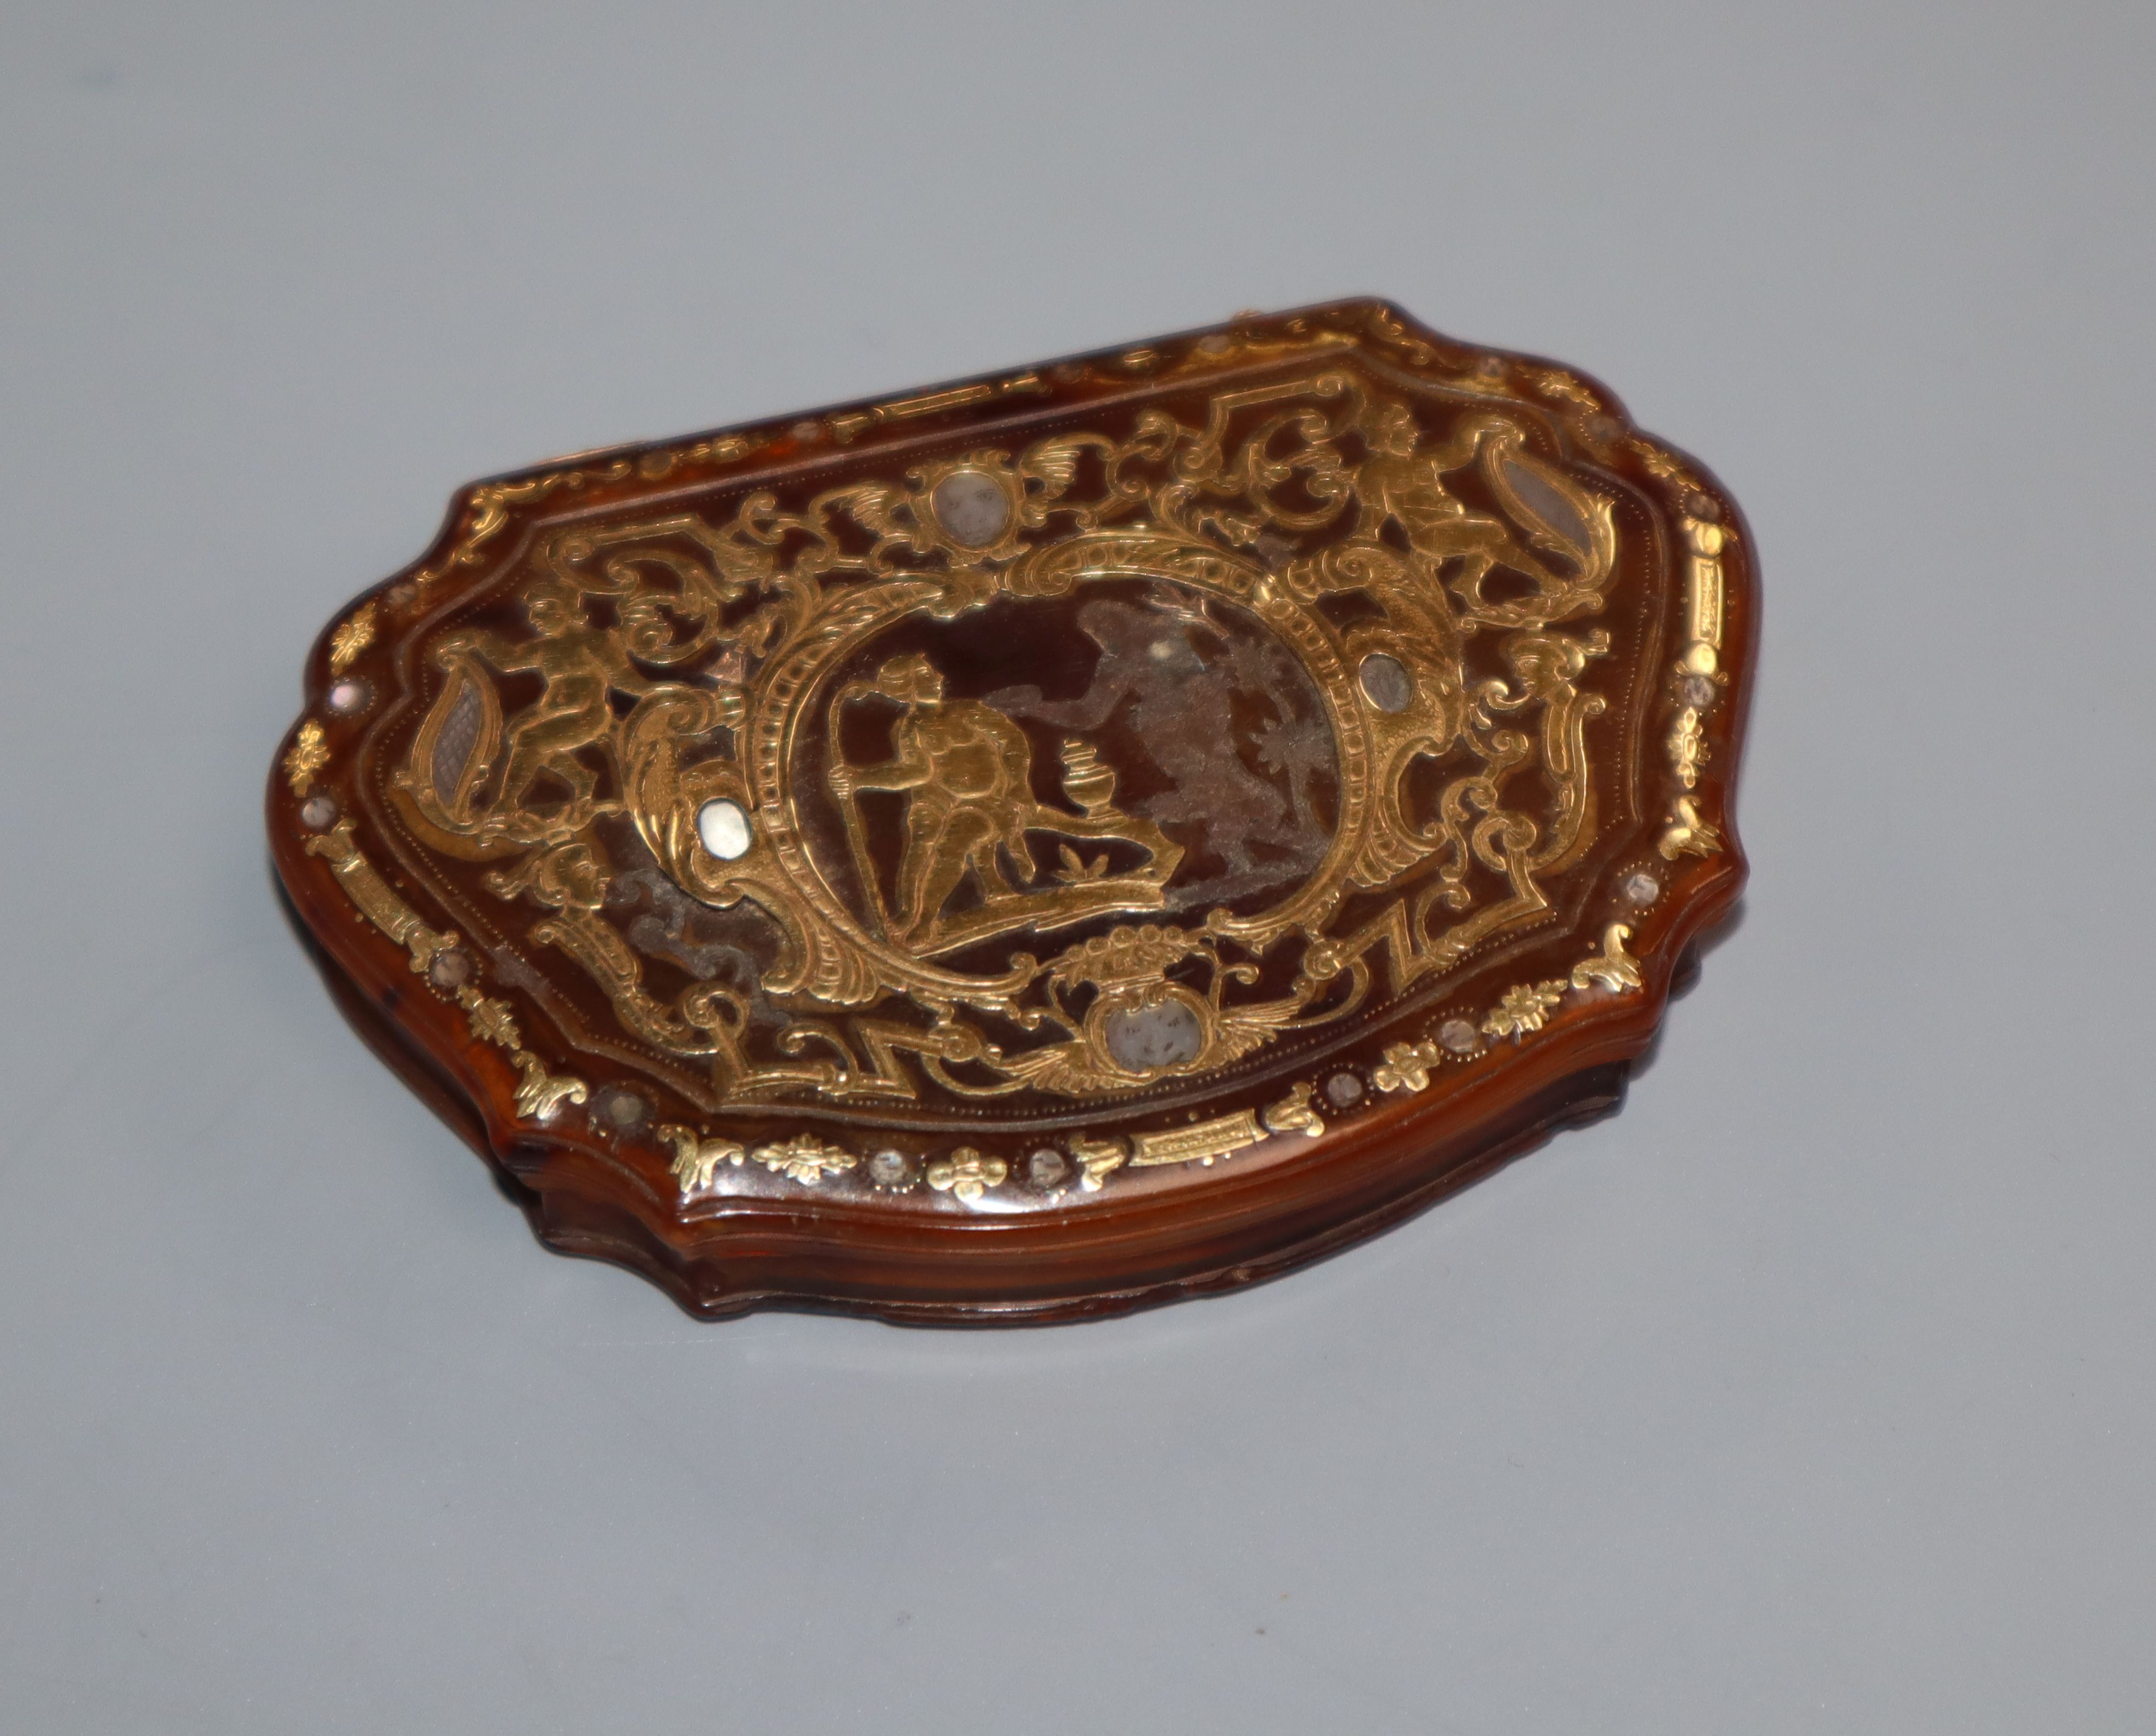 An 18th century gold overlaid tortoiseshell snuff box